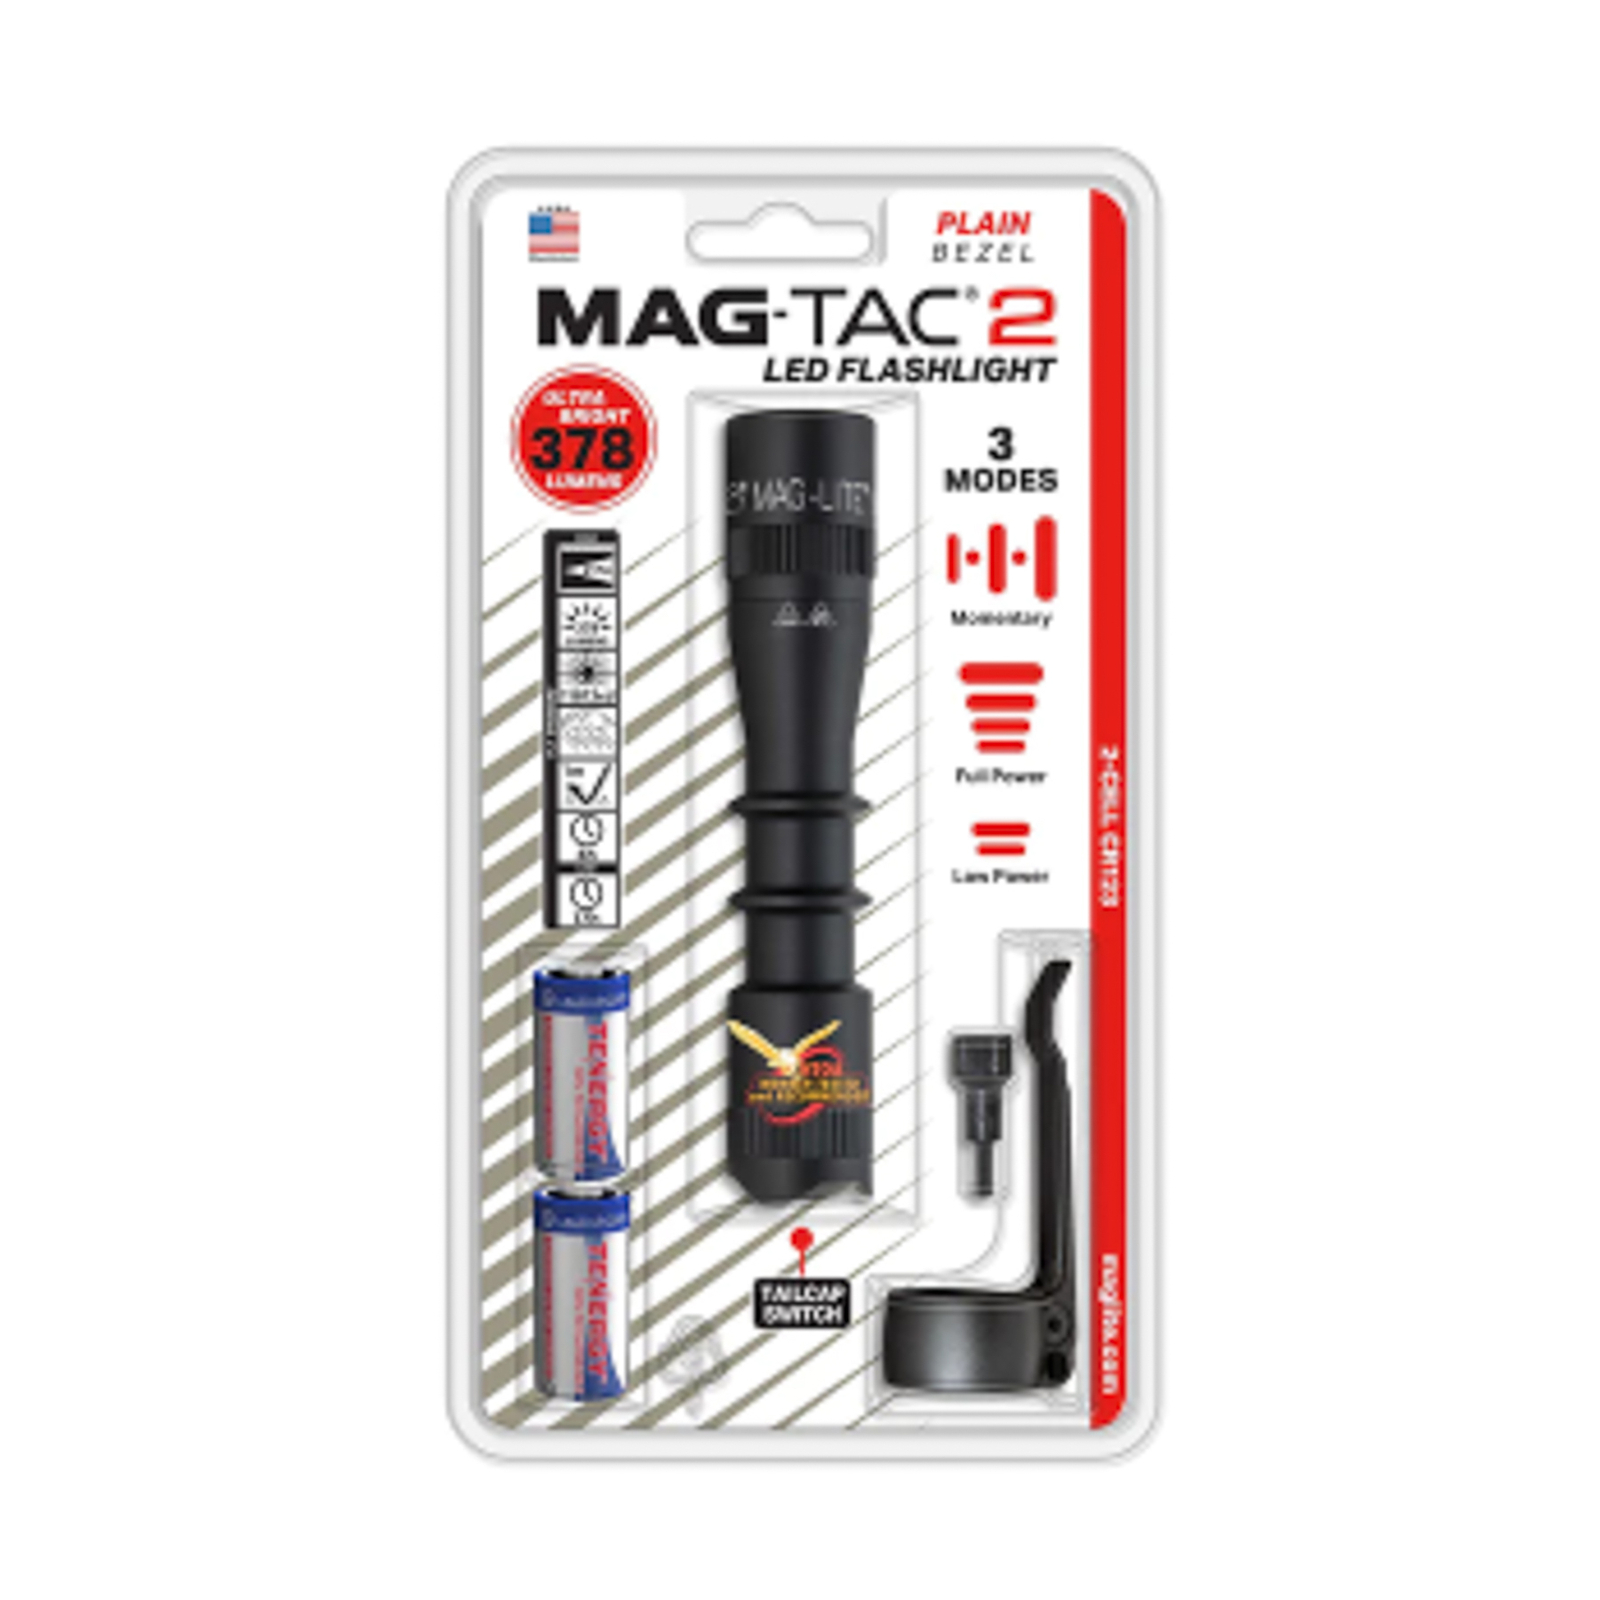 Lanterna LED Maglite Mag-Tac II, Cell CR123, preto